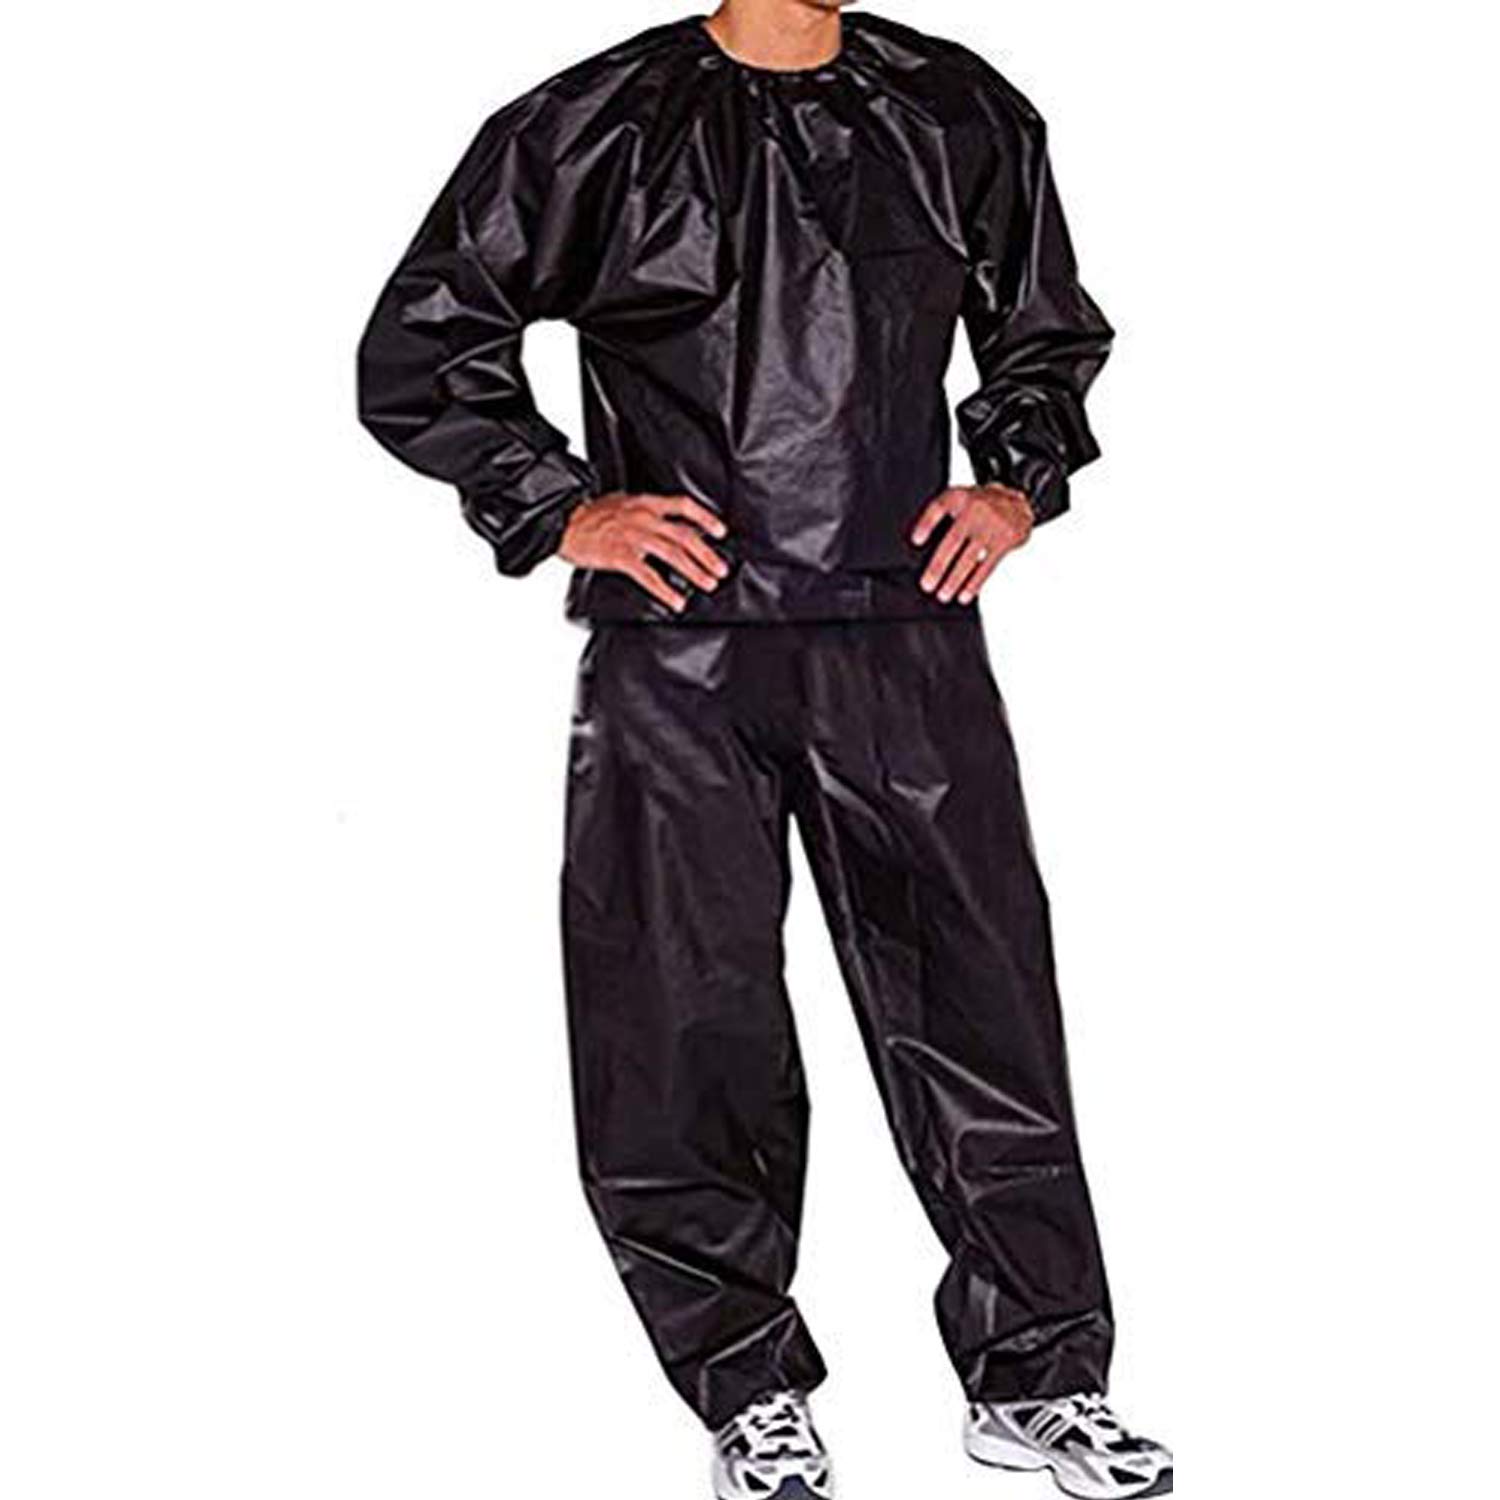 GOLD XIONG PADISHAH Upgrade] Heavy Duty Sauna Suits Exercise sweat sauna suit,Men Sweat Suit Plus Size Sauna Suit for Men and Women - Suitable for s